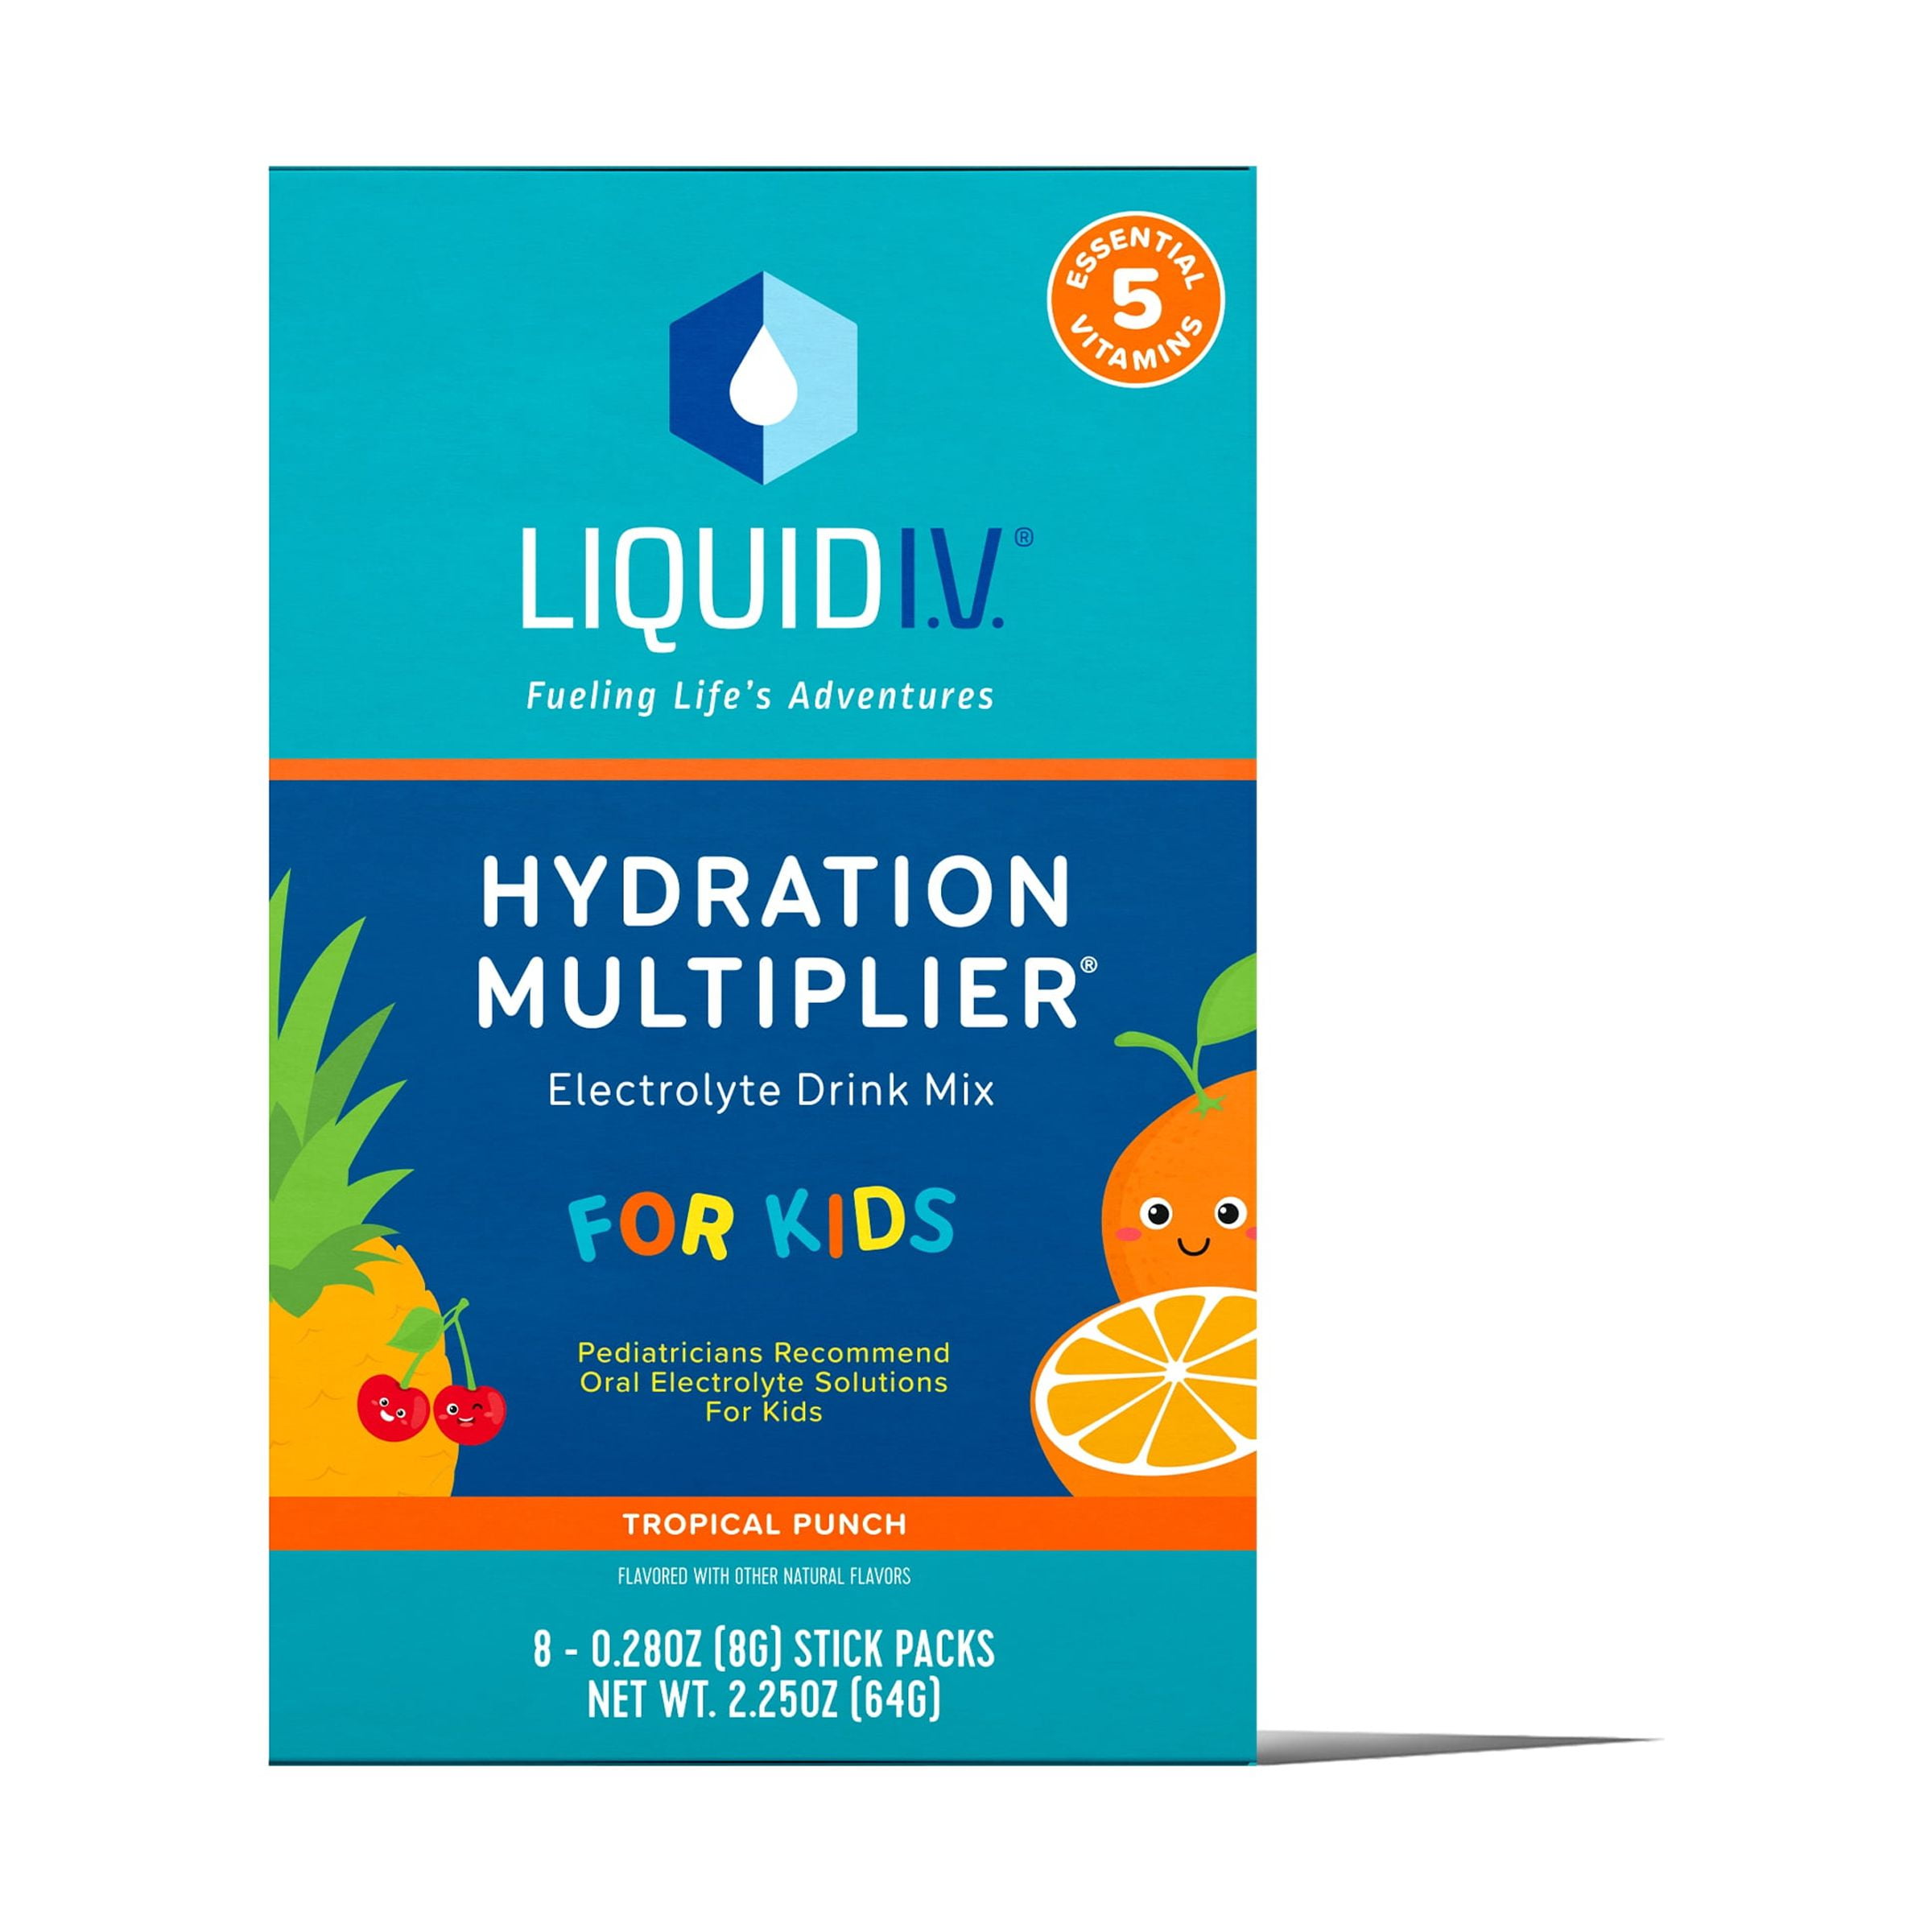 Liquid IV Hydration Multiplier – Pro Beauty